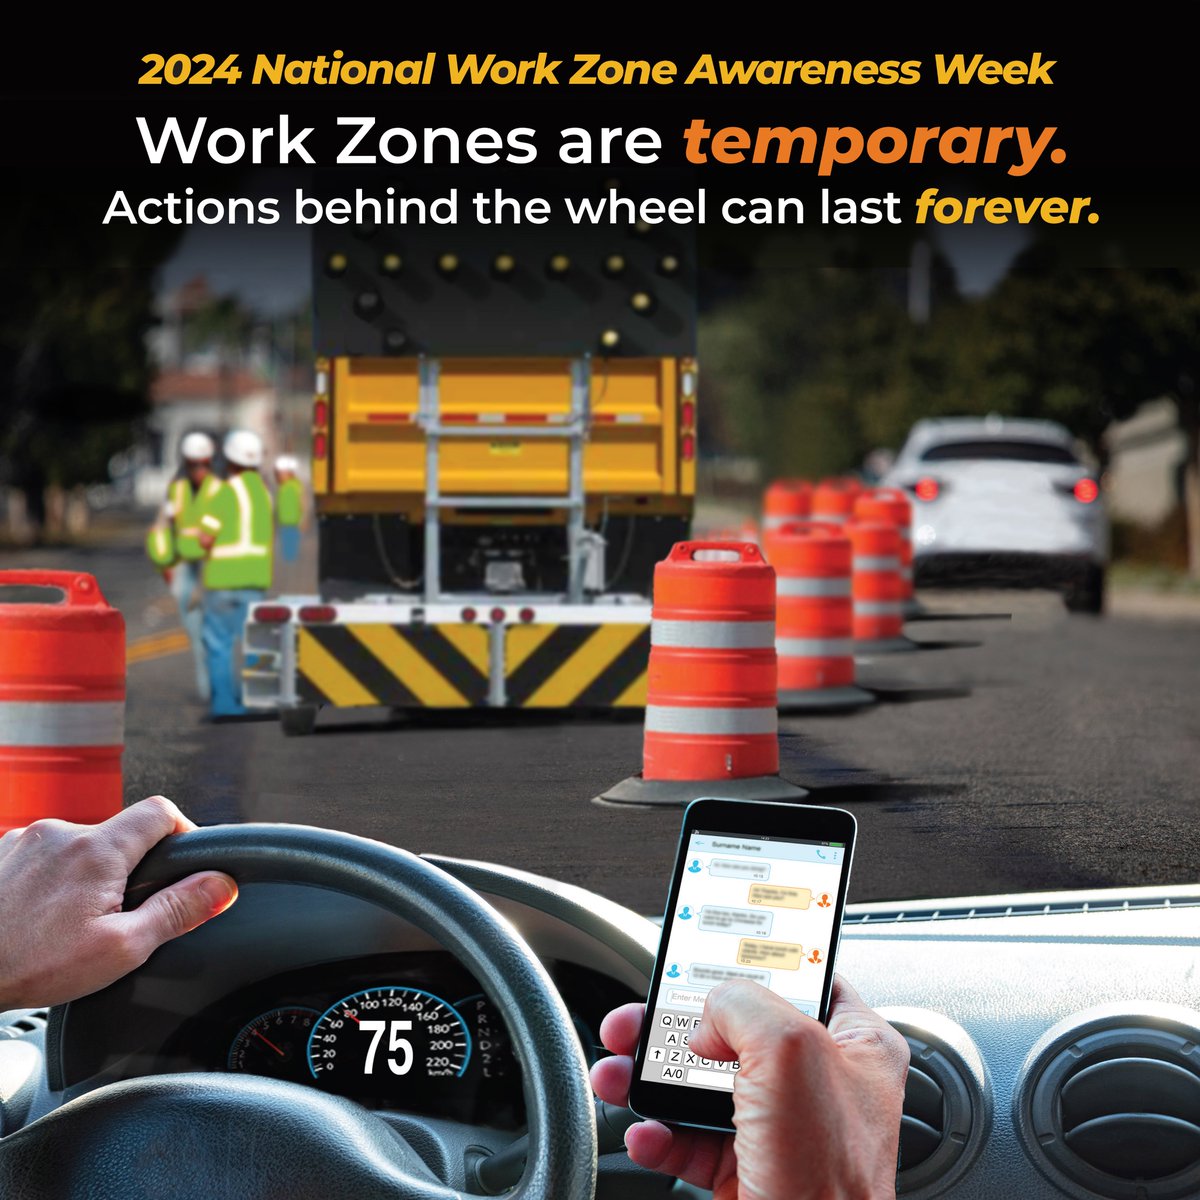 Today kicks off National Work Zone Awareness Week!
#NWZAW #Orange4Safety

workzonesafety.org